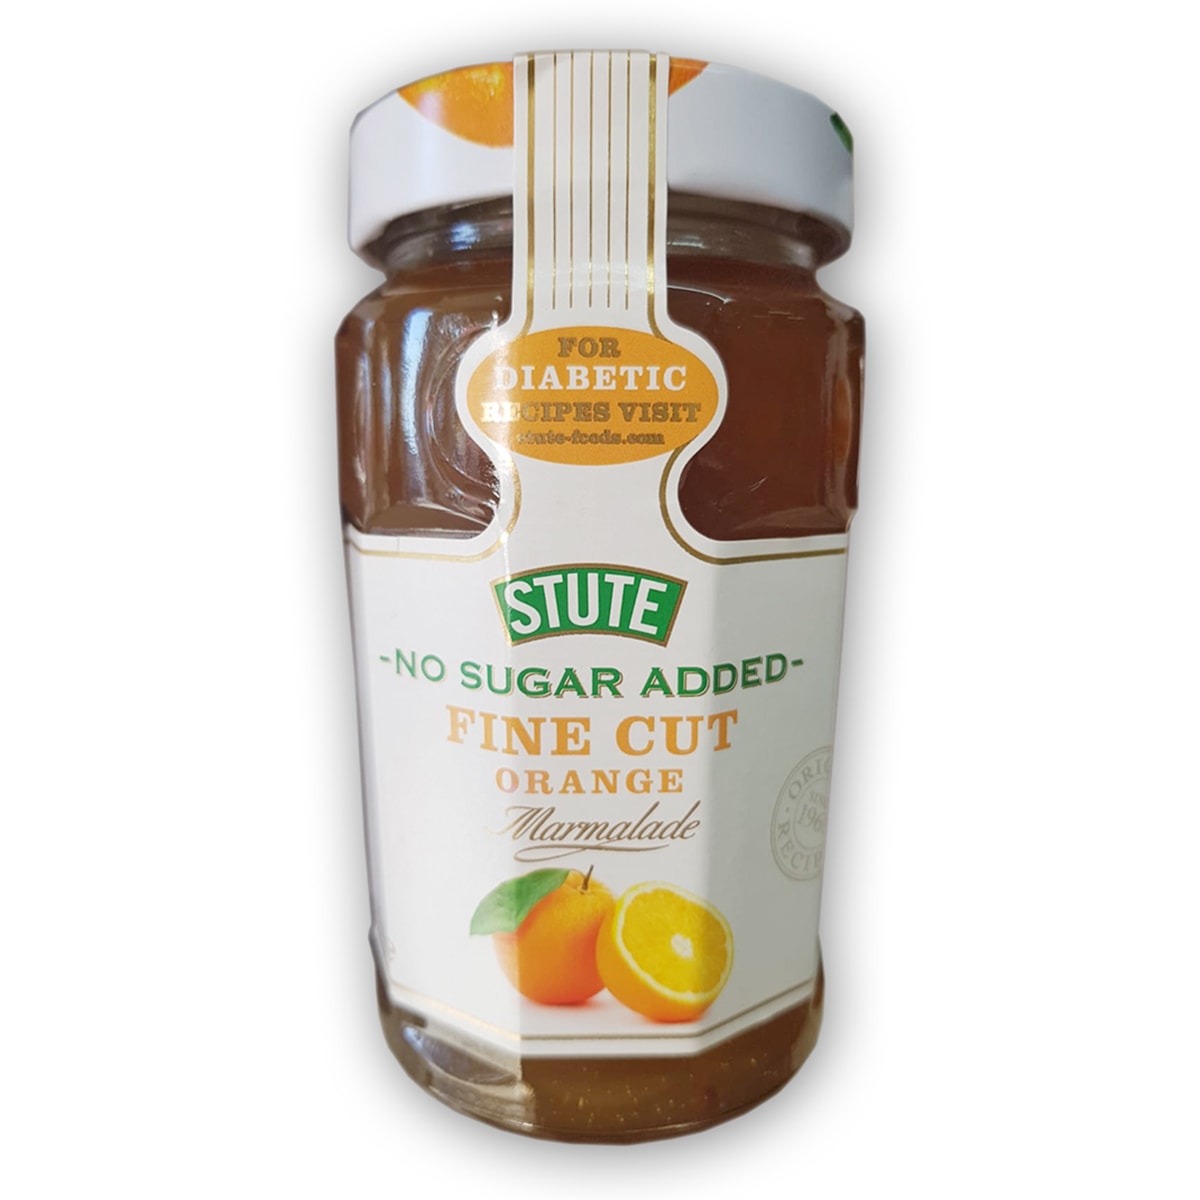 Buy Stute Diabetic Fine Cut Orange Extra Marmalade Jam (No Sugar Added) - 430 gm